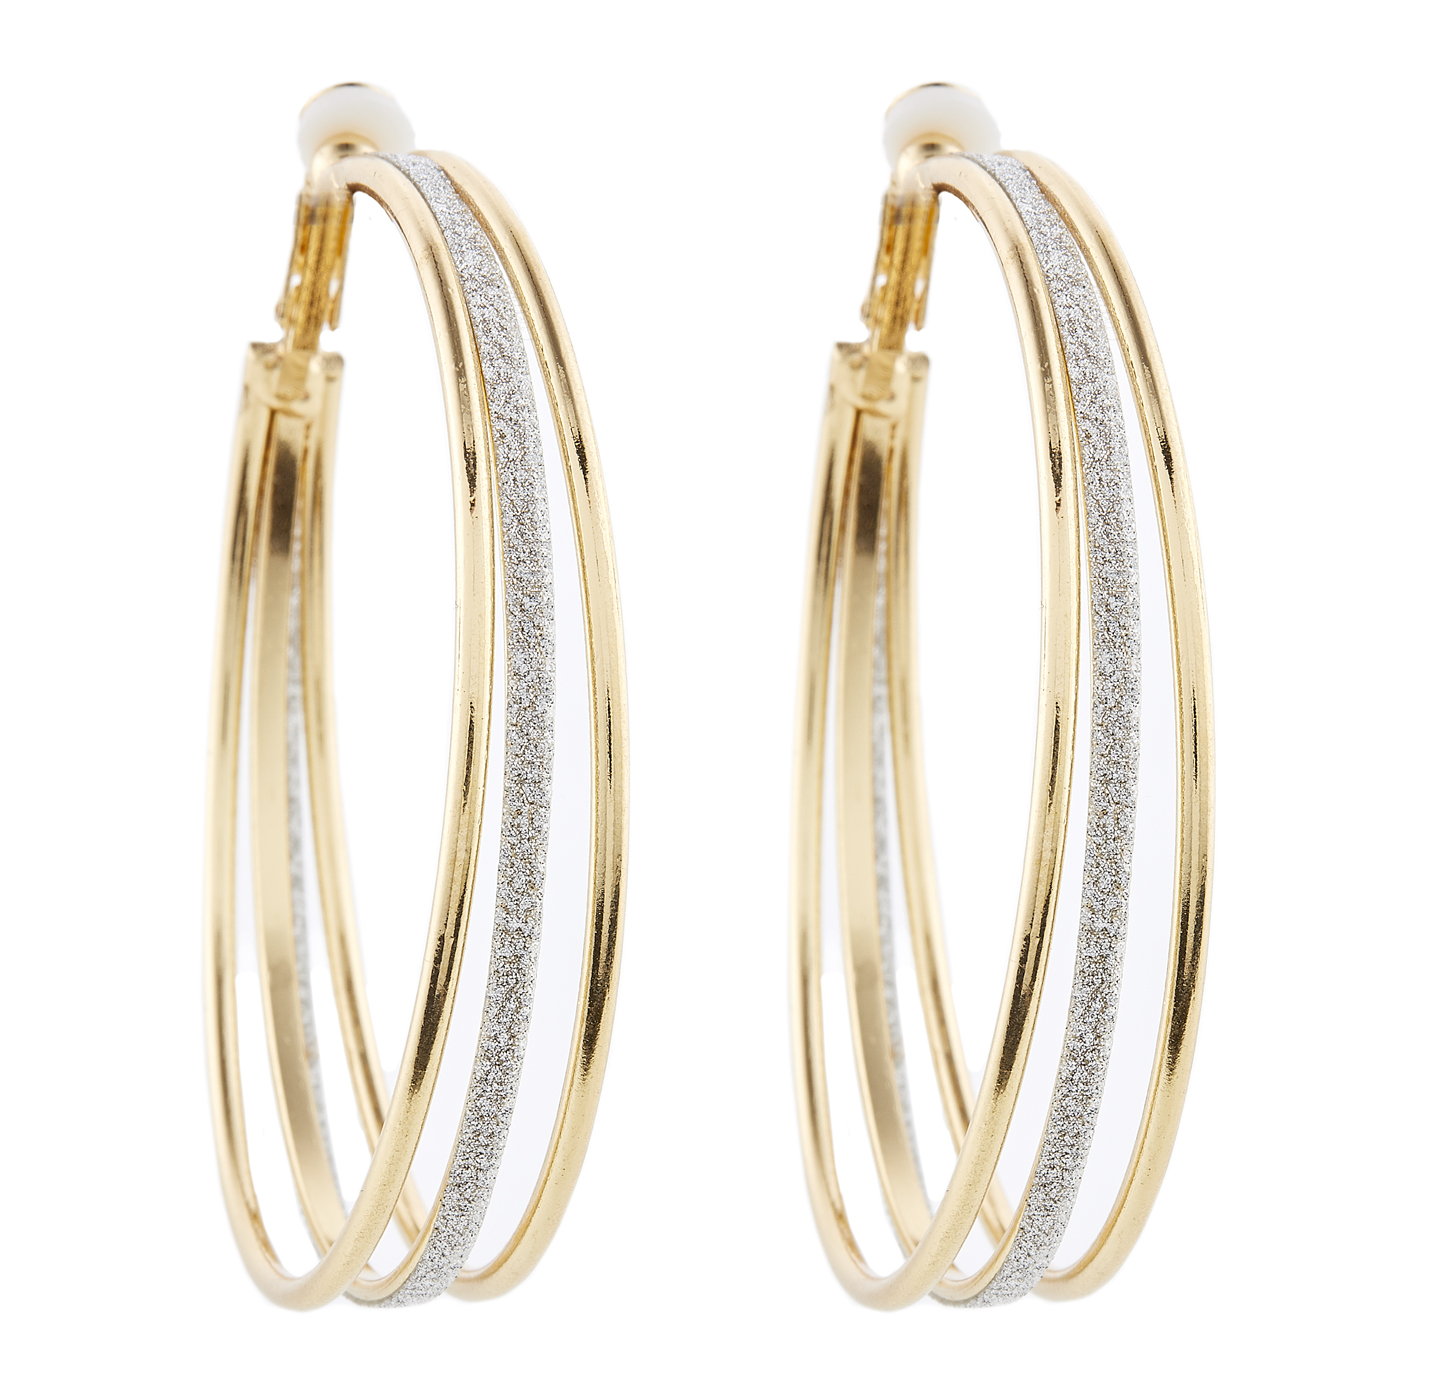 Clip On Hoop Earrings - Kanda G - gold earring with three hoops